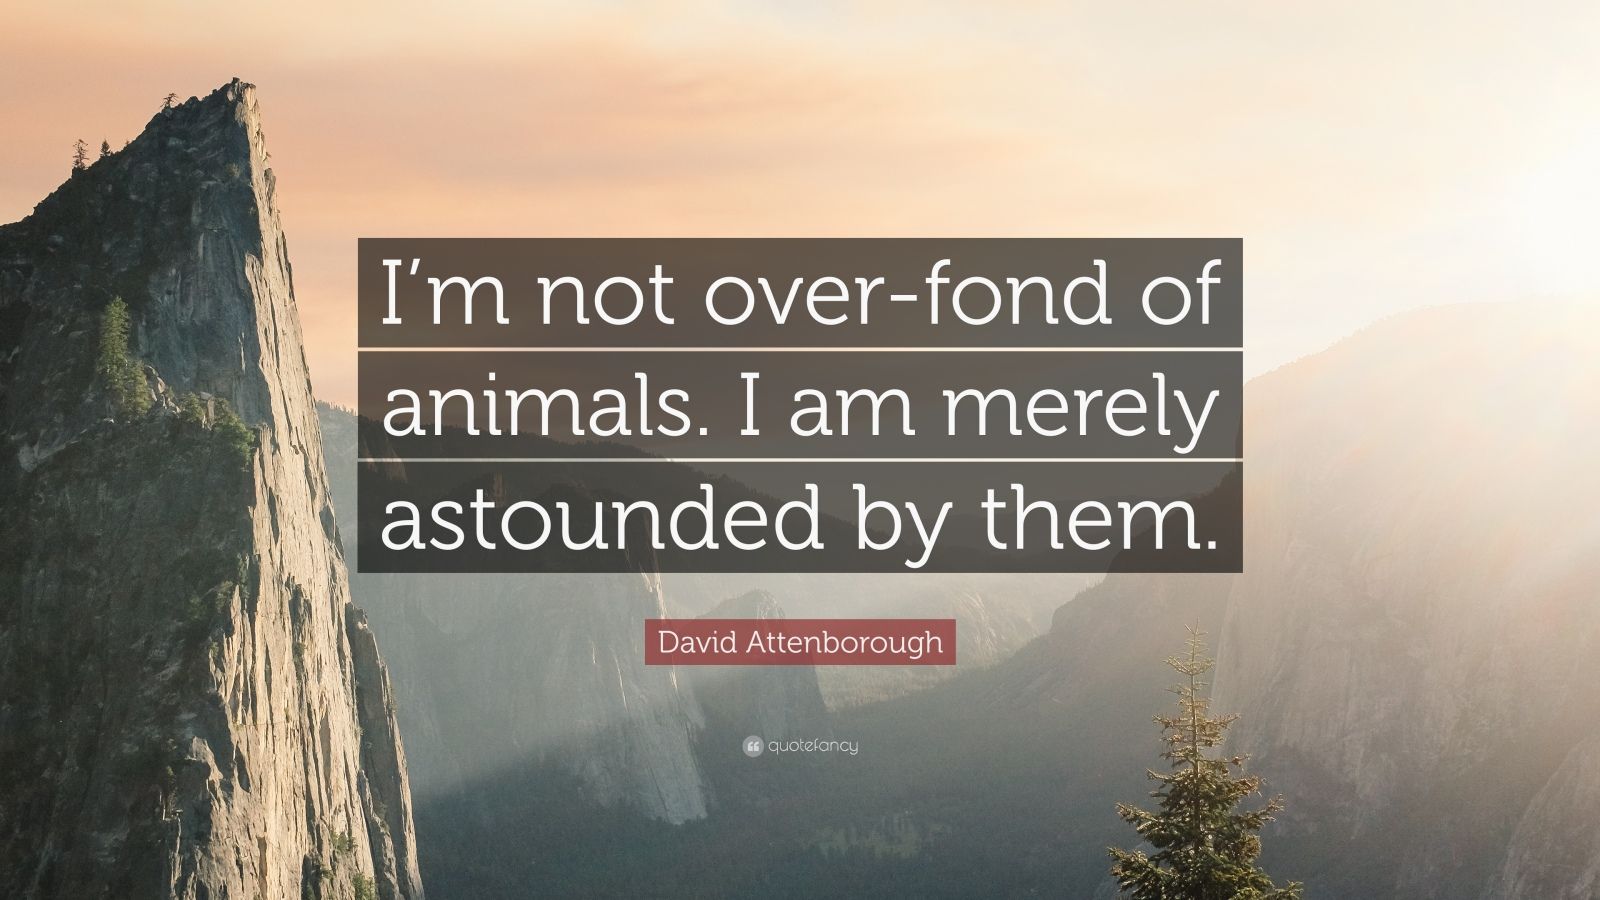 David Attenborough Quote: "I'm not over-fond of animals. I ...